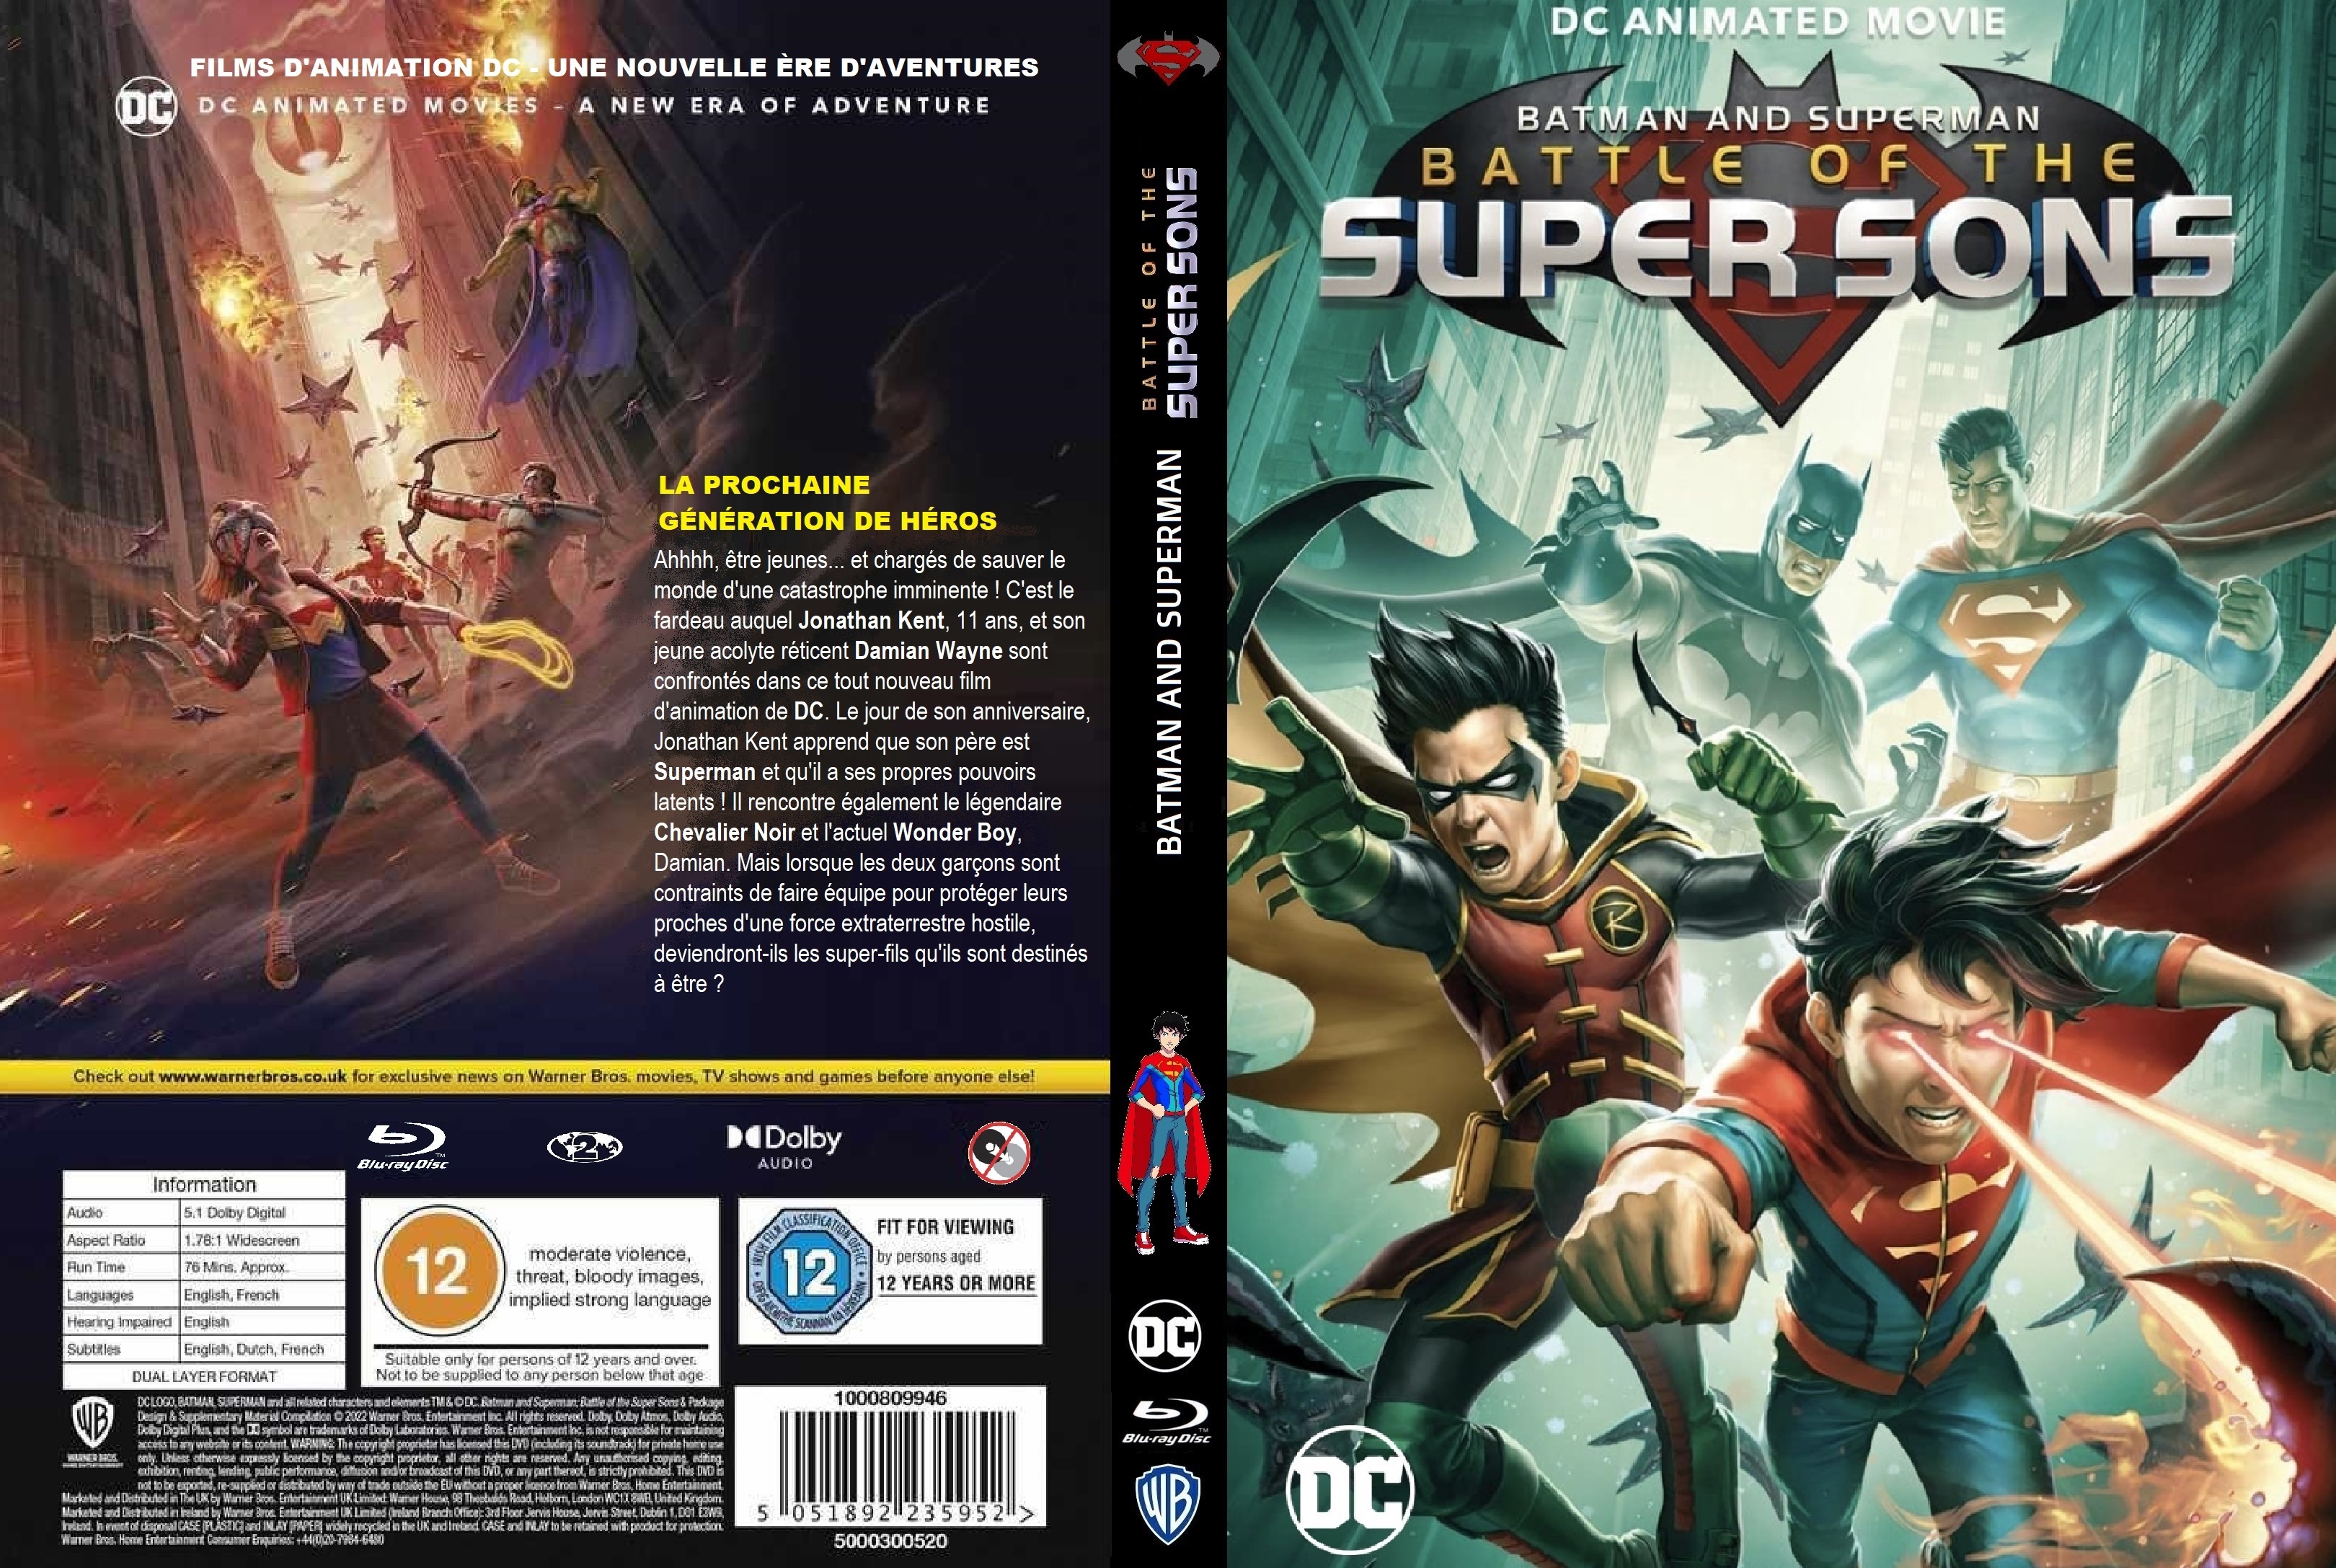 Jaquette DVD Batman and Superman Battle of the Super-sons custom